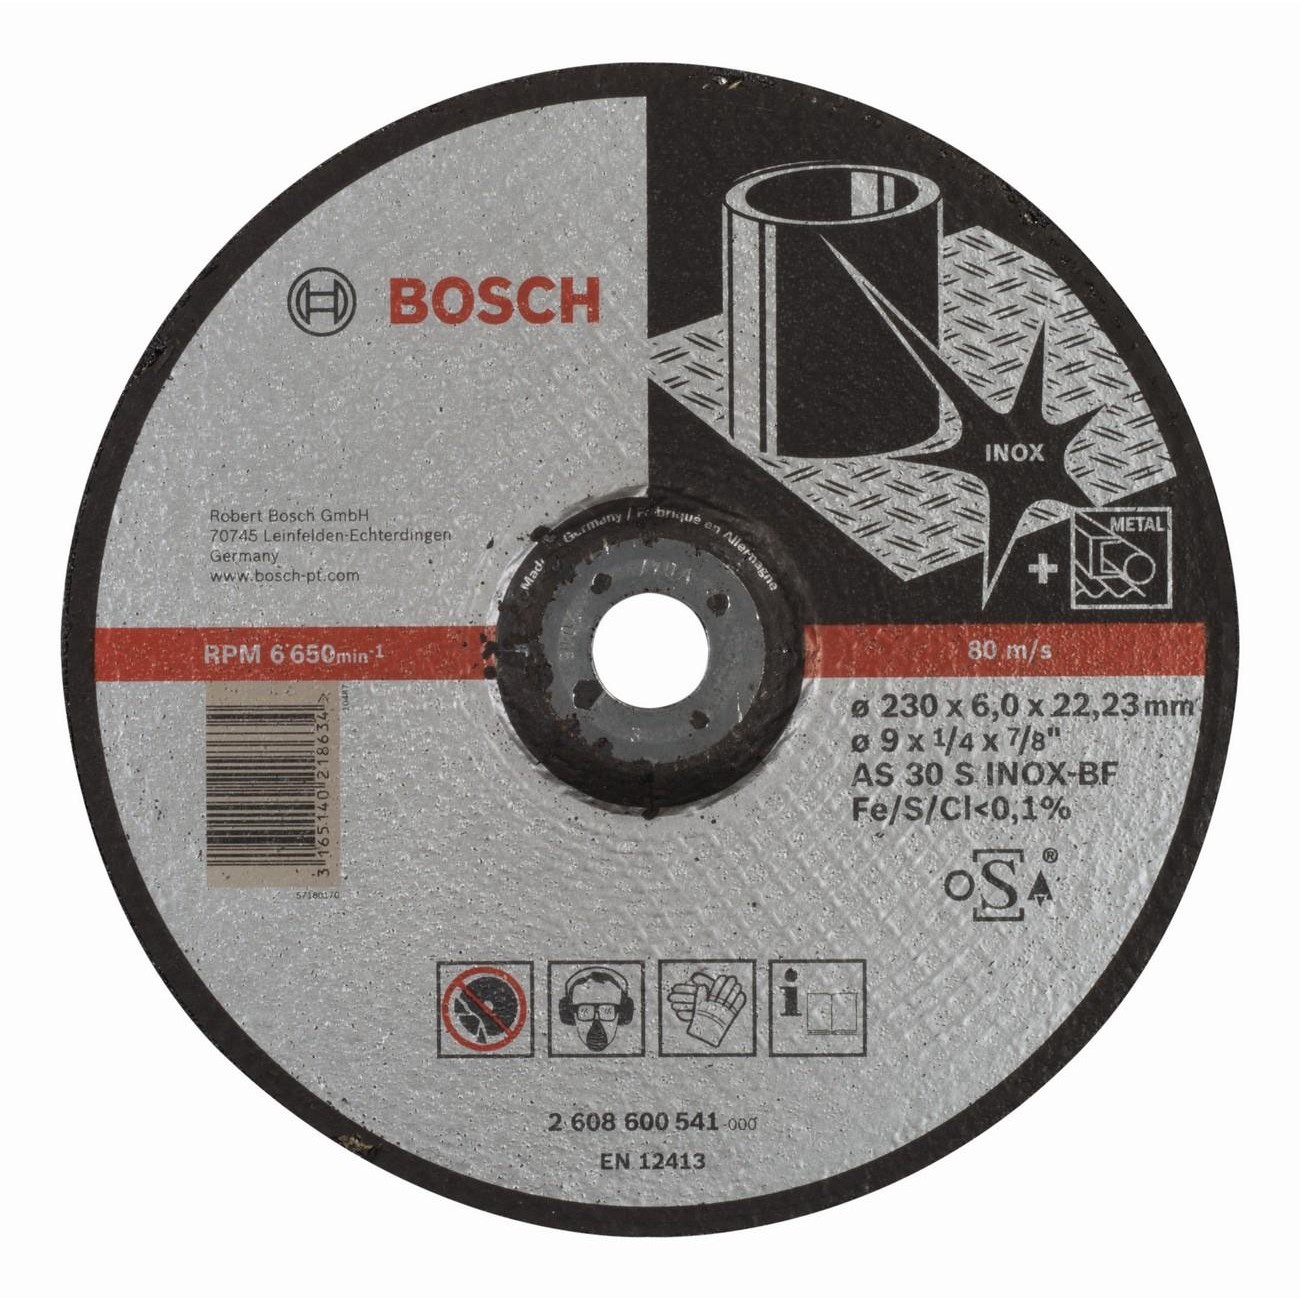 BOSCH Professional AS 30 S INOX BF Диск за грубо шлифоване вдлъбнат инокс 230 мм 6 мм (2608600541)